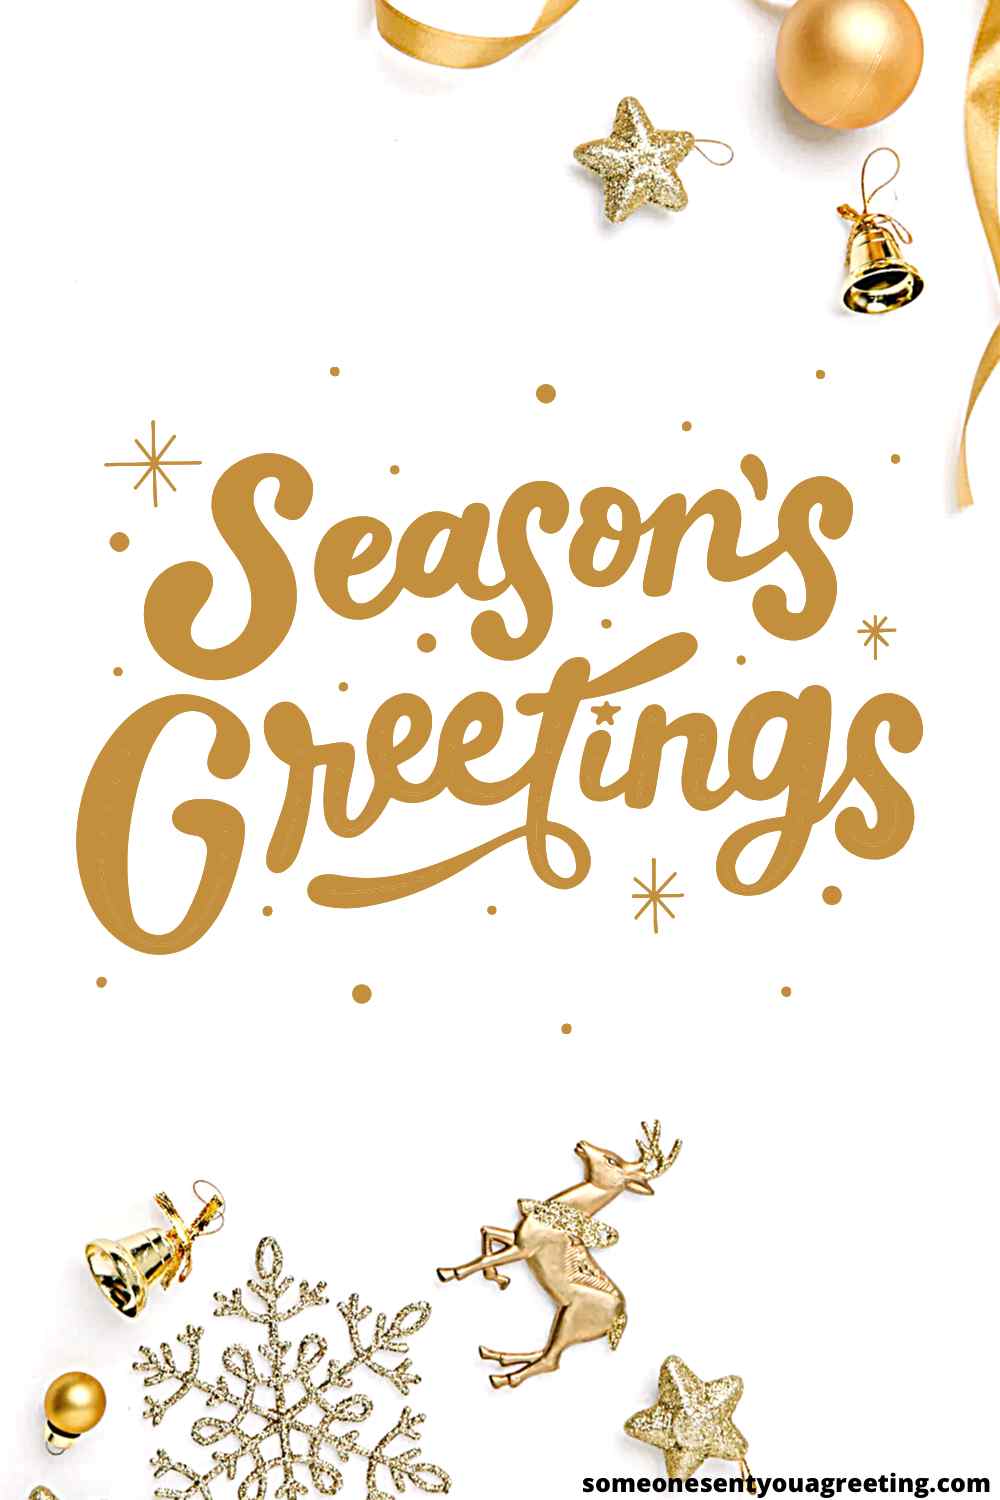 season's greetings message